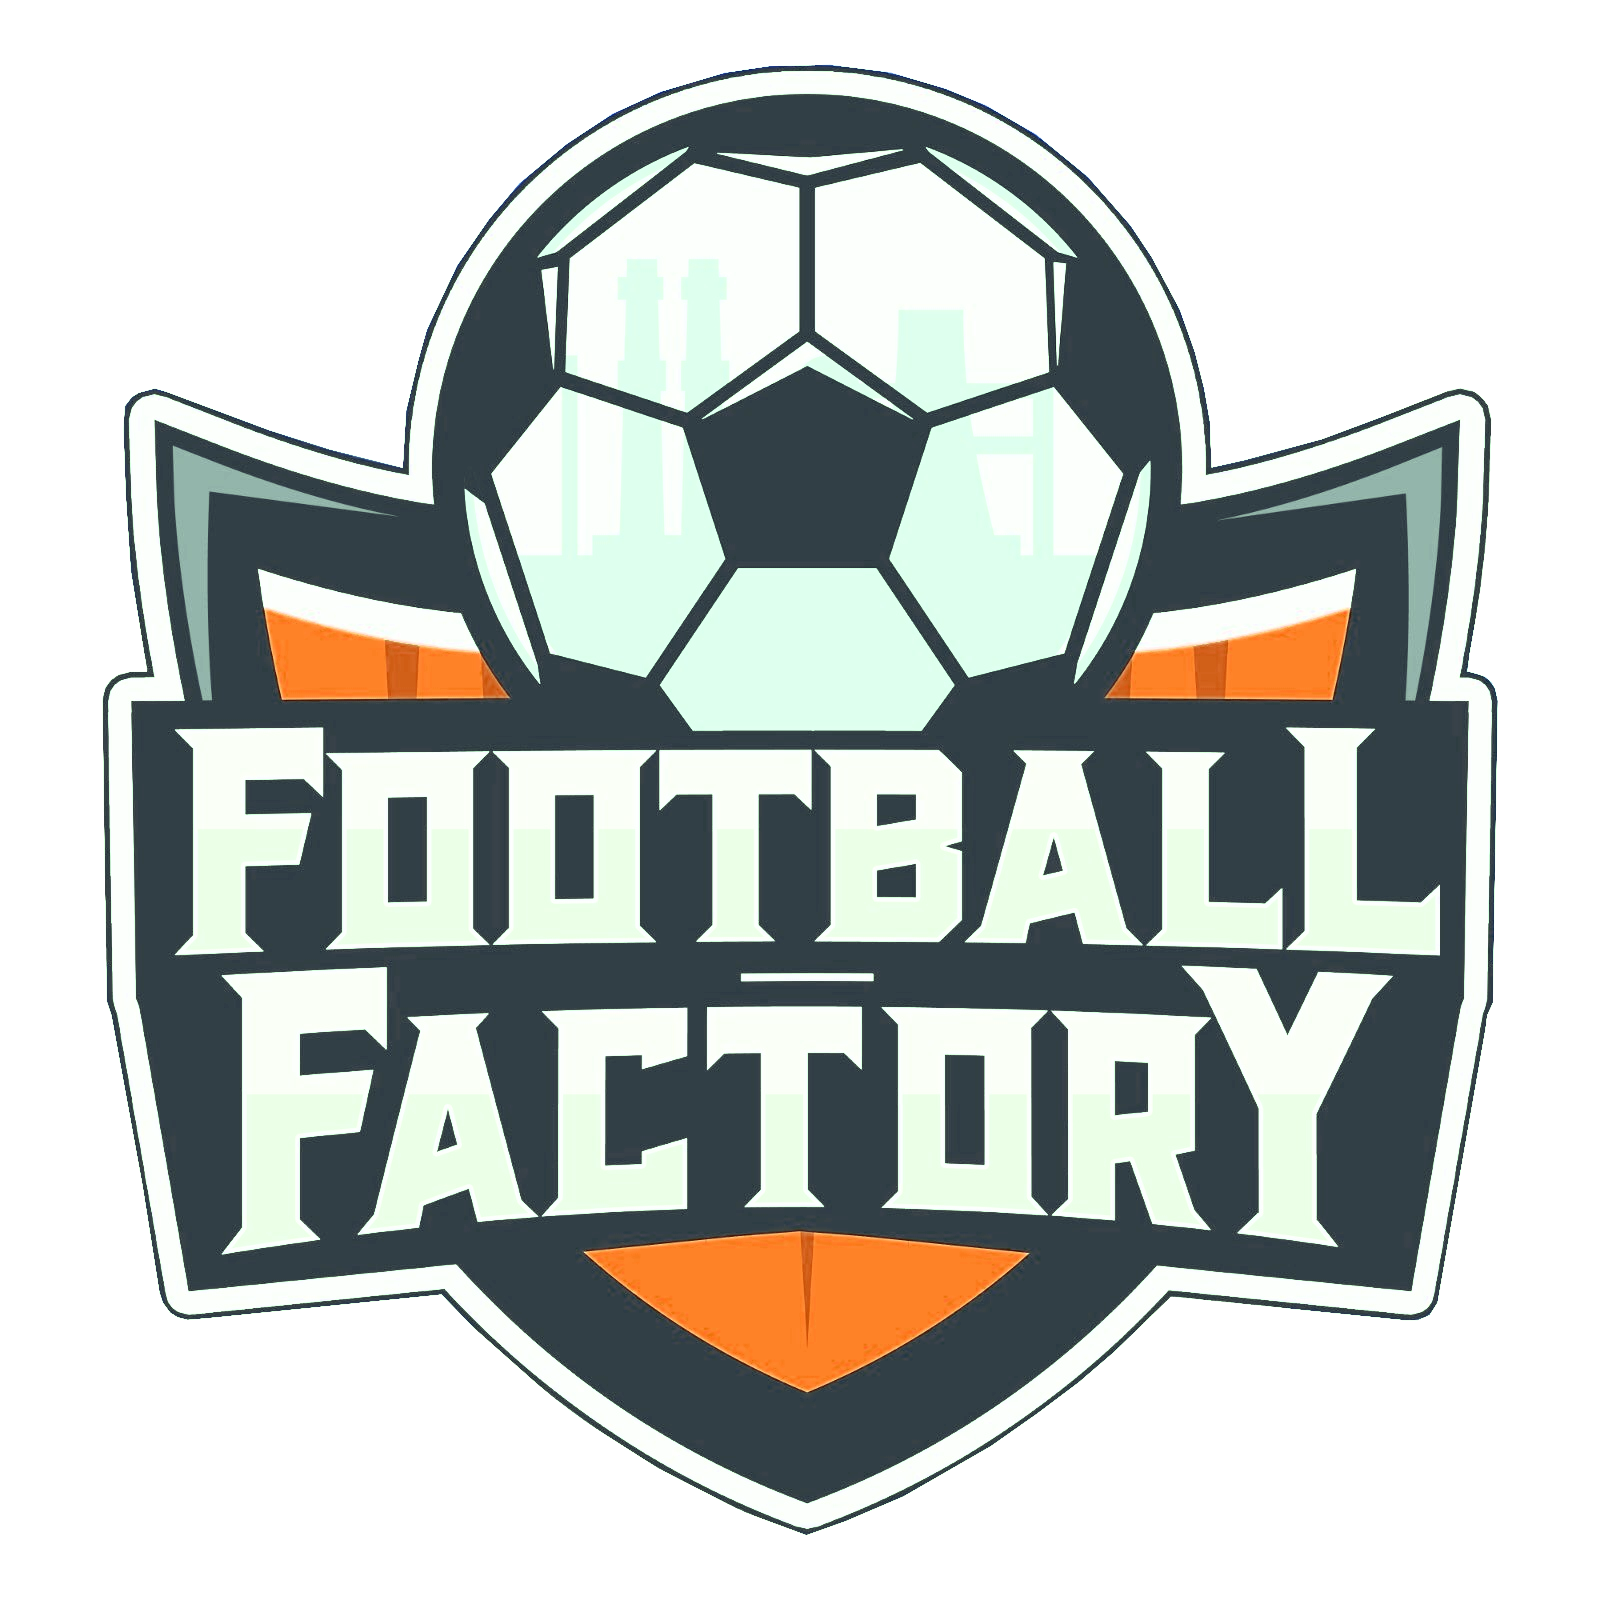 Football Factory Midlands